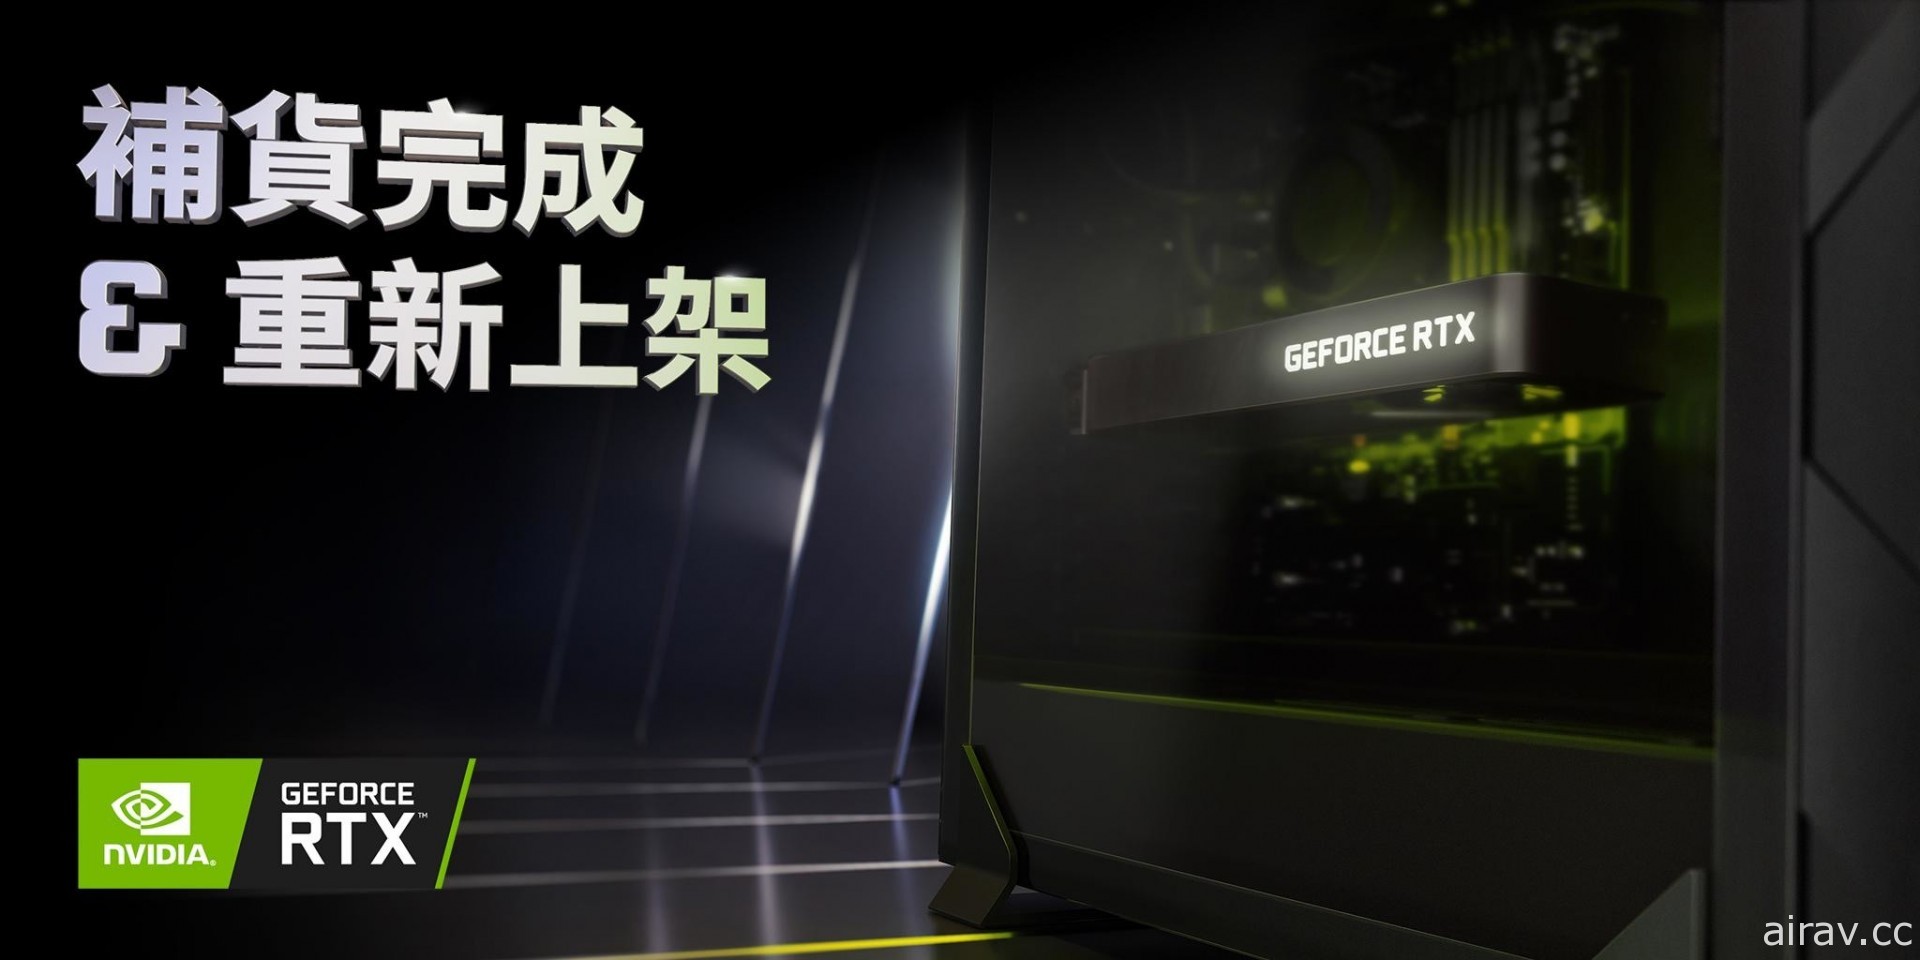 NVIDIA 宣布 GeForce RTX 30 系列显示卡现已“补货完成，重新上架”全面贩售中